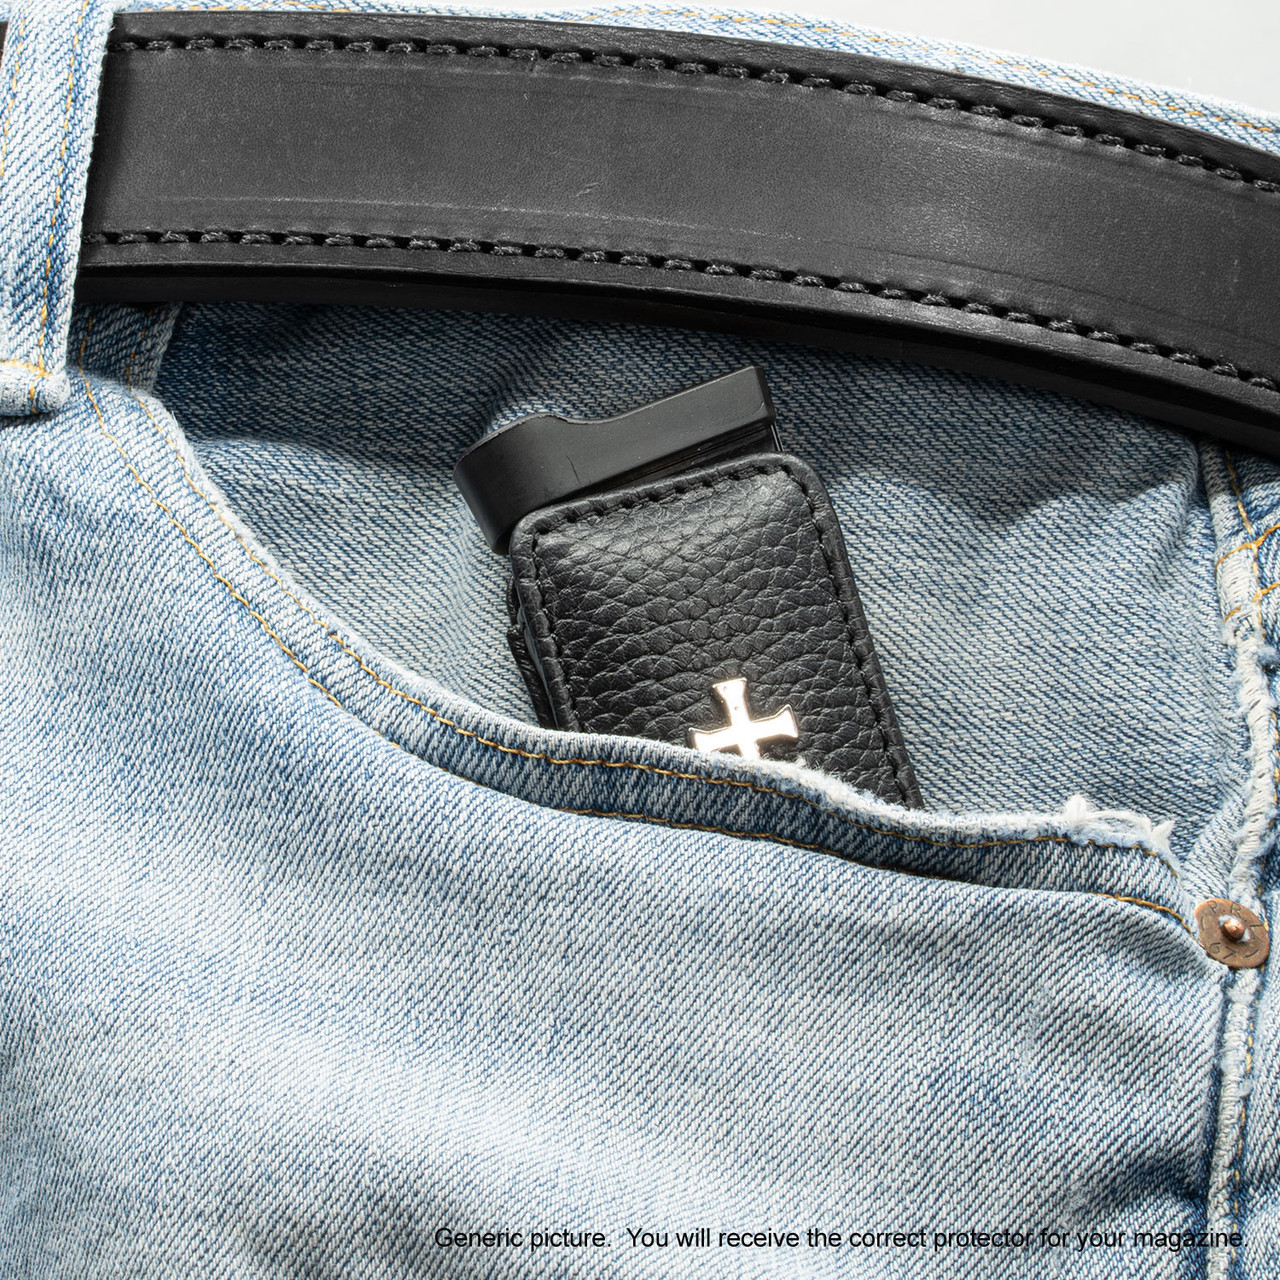 Remington RM380 Black Leather Cross Magazine Pocket Protector